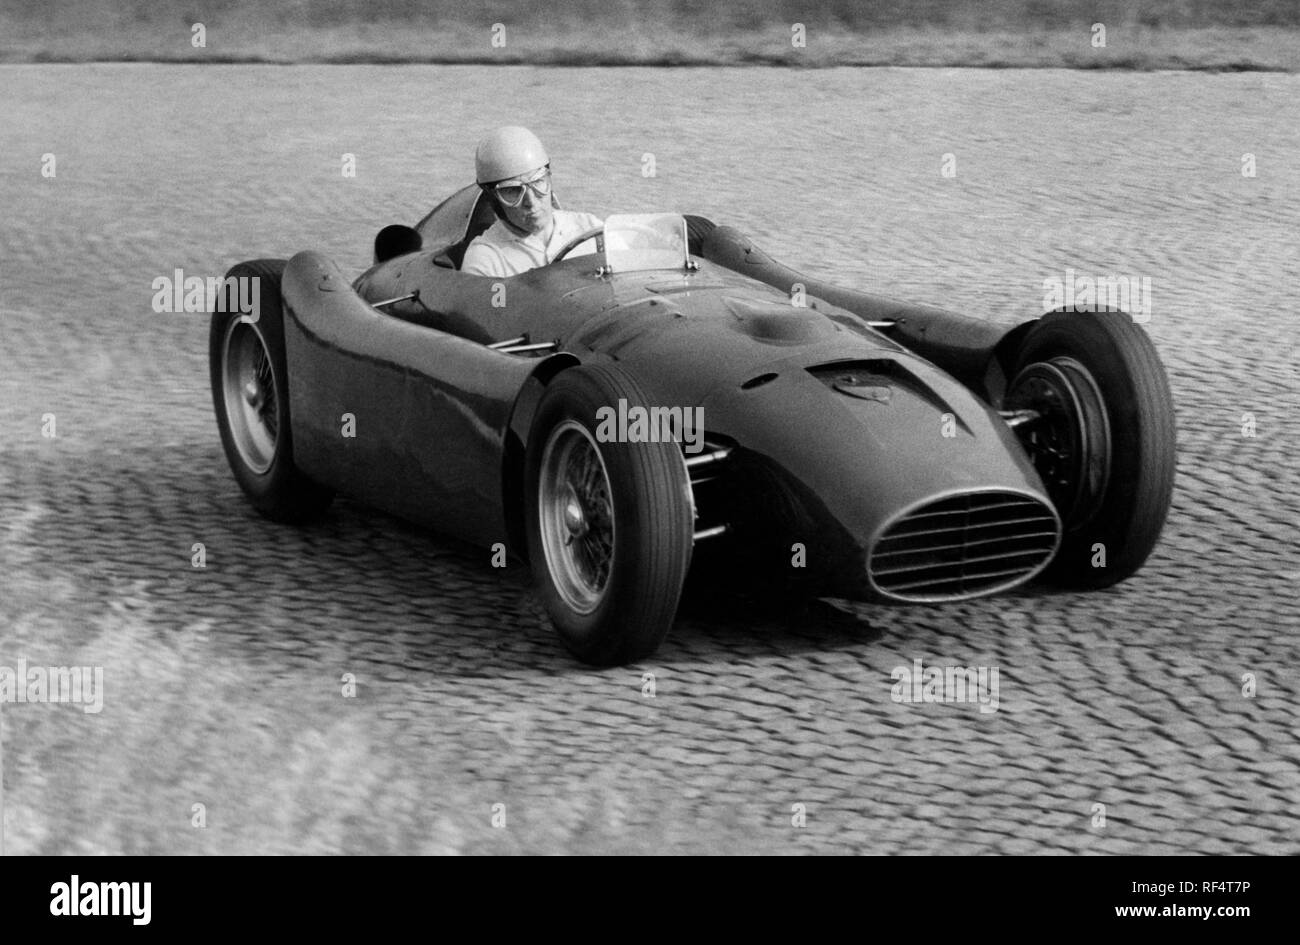 Alberto Ascari on the lancia grand prix, 1955 Stock Photo